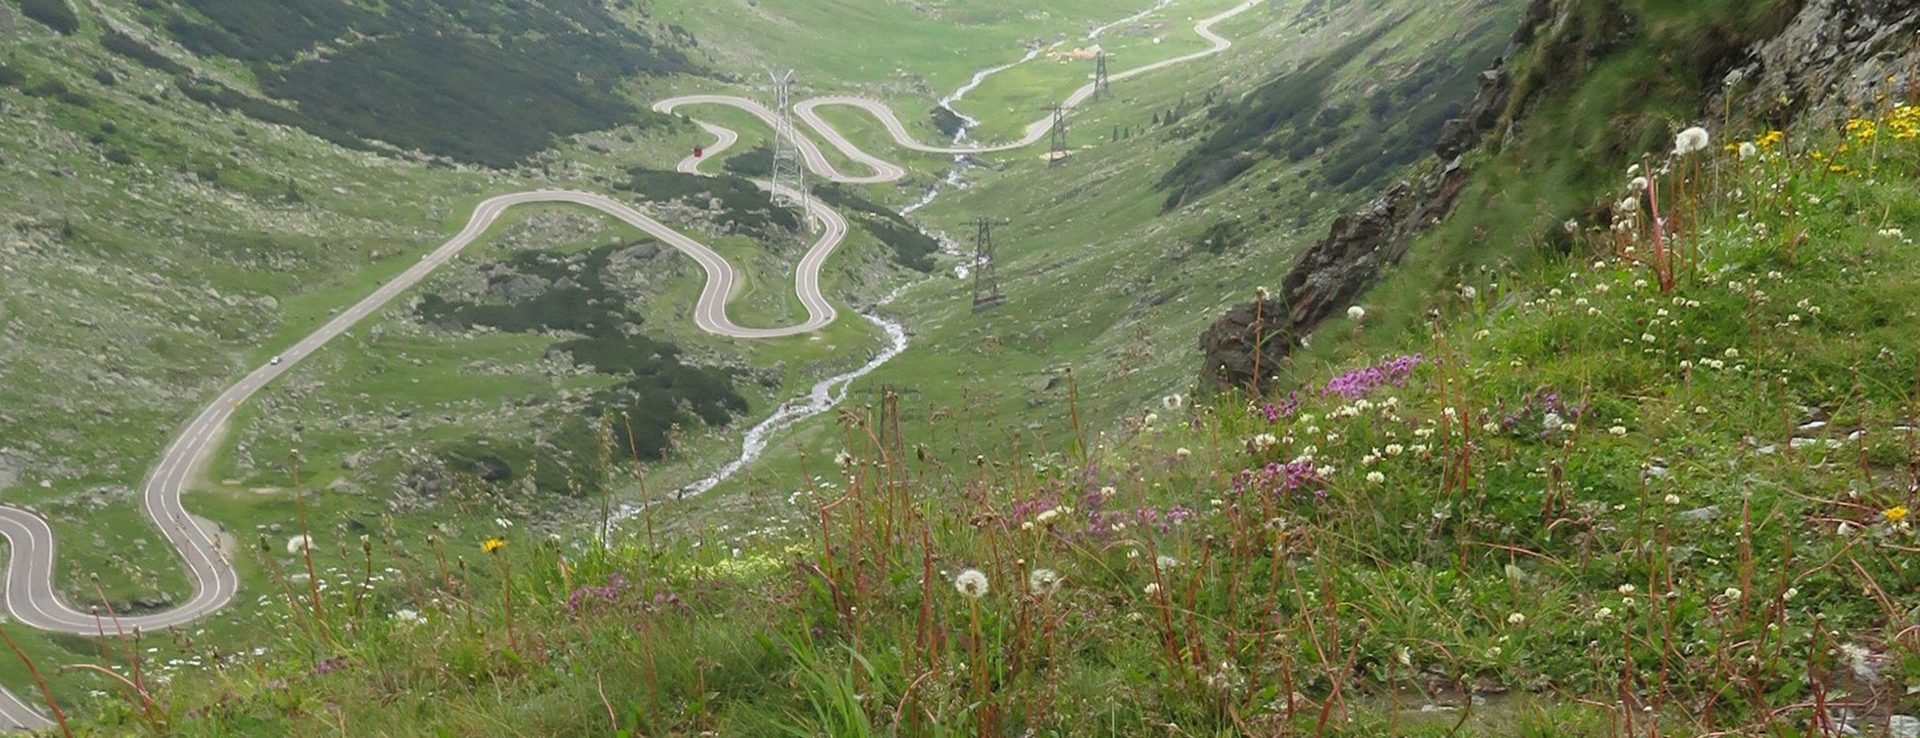 View of twisting Transfăgărășan highway from above with Porsche 911